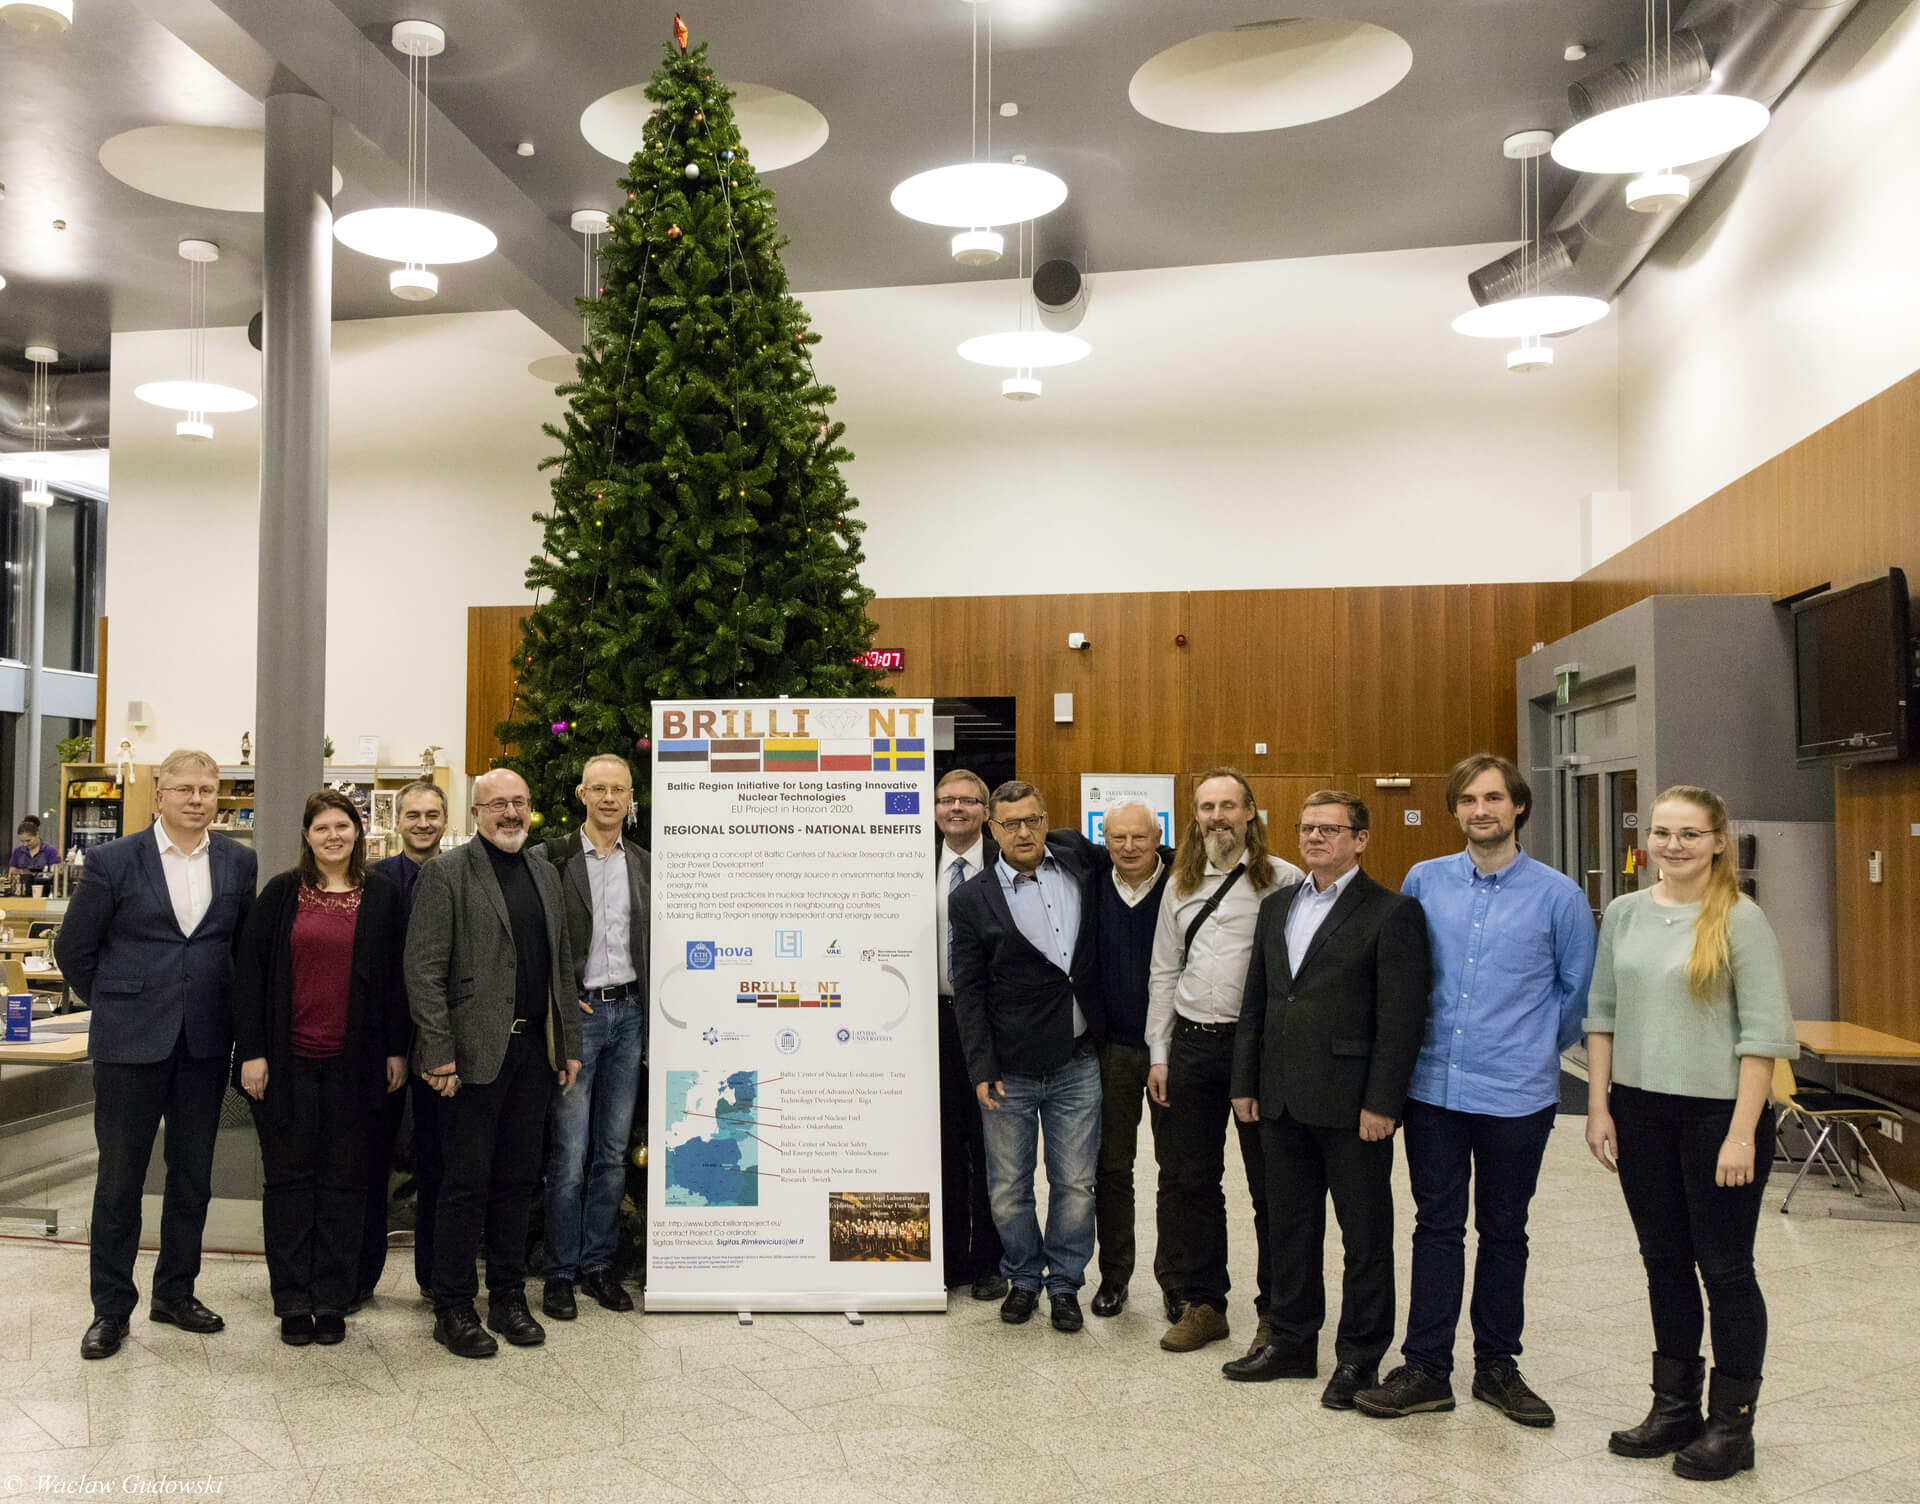 Project BRILLIANT meeting in Tartu, Estonia. 7-8 December 2017.